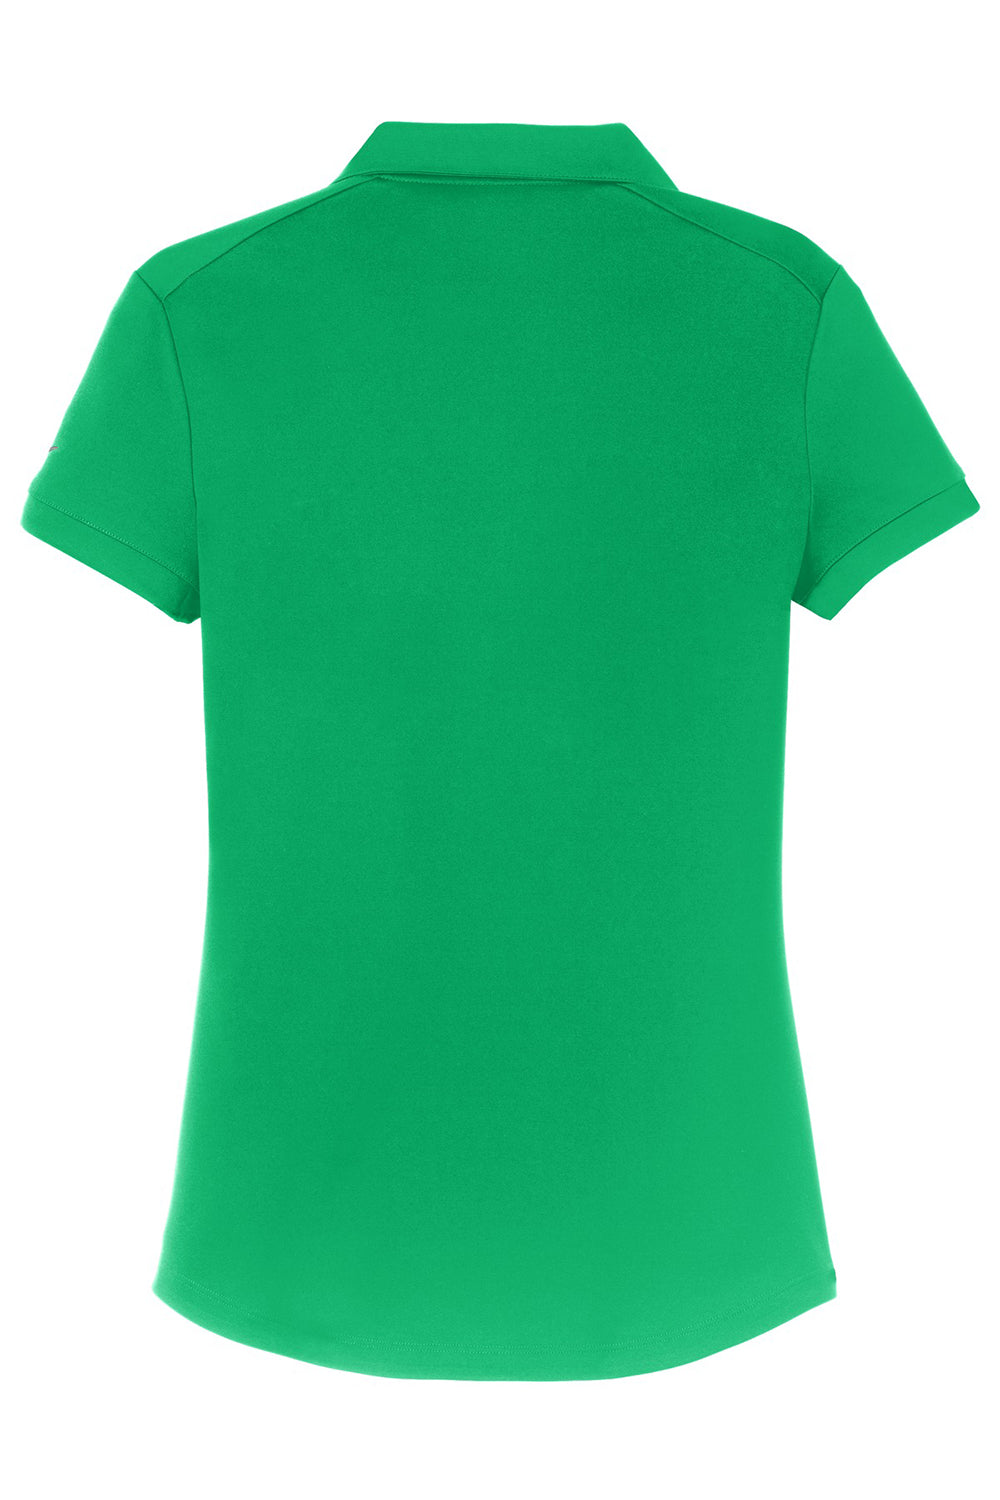 Nike 811807 Womens Players Dri-Fit Moisture Wicking Short Sleeve Polo Shirt Pine Green Flat Back